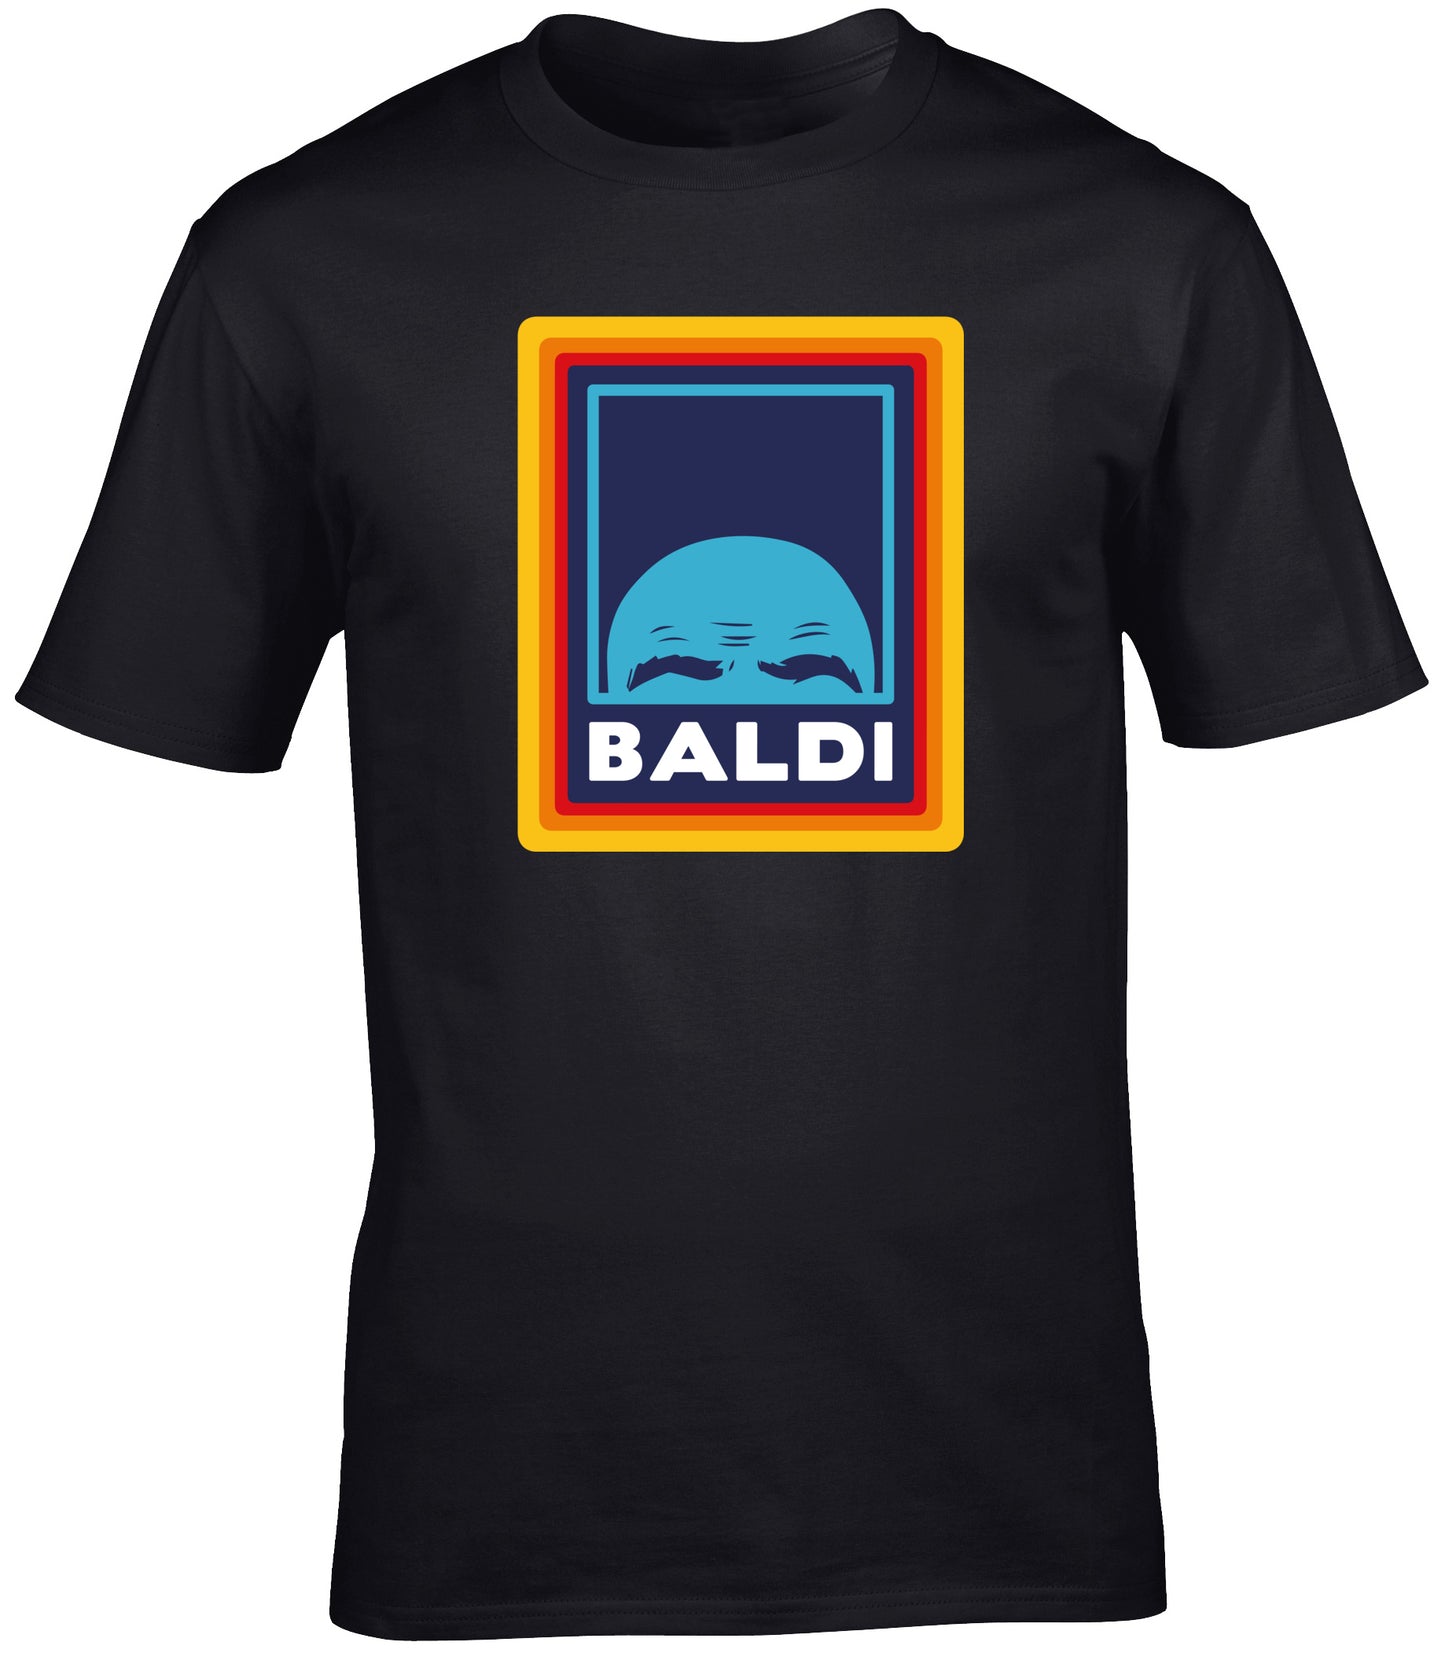 Baldi unisex t-shirt